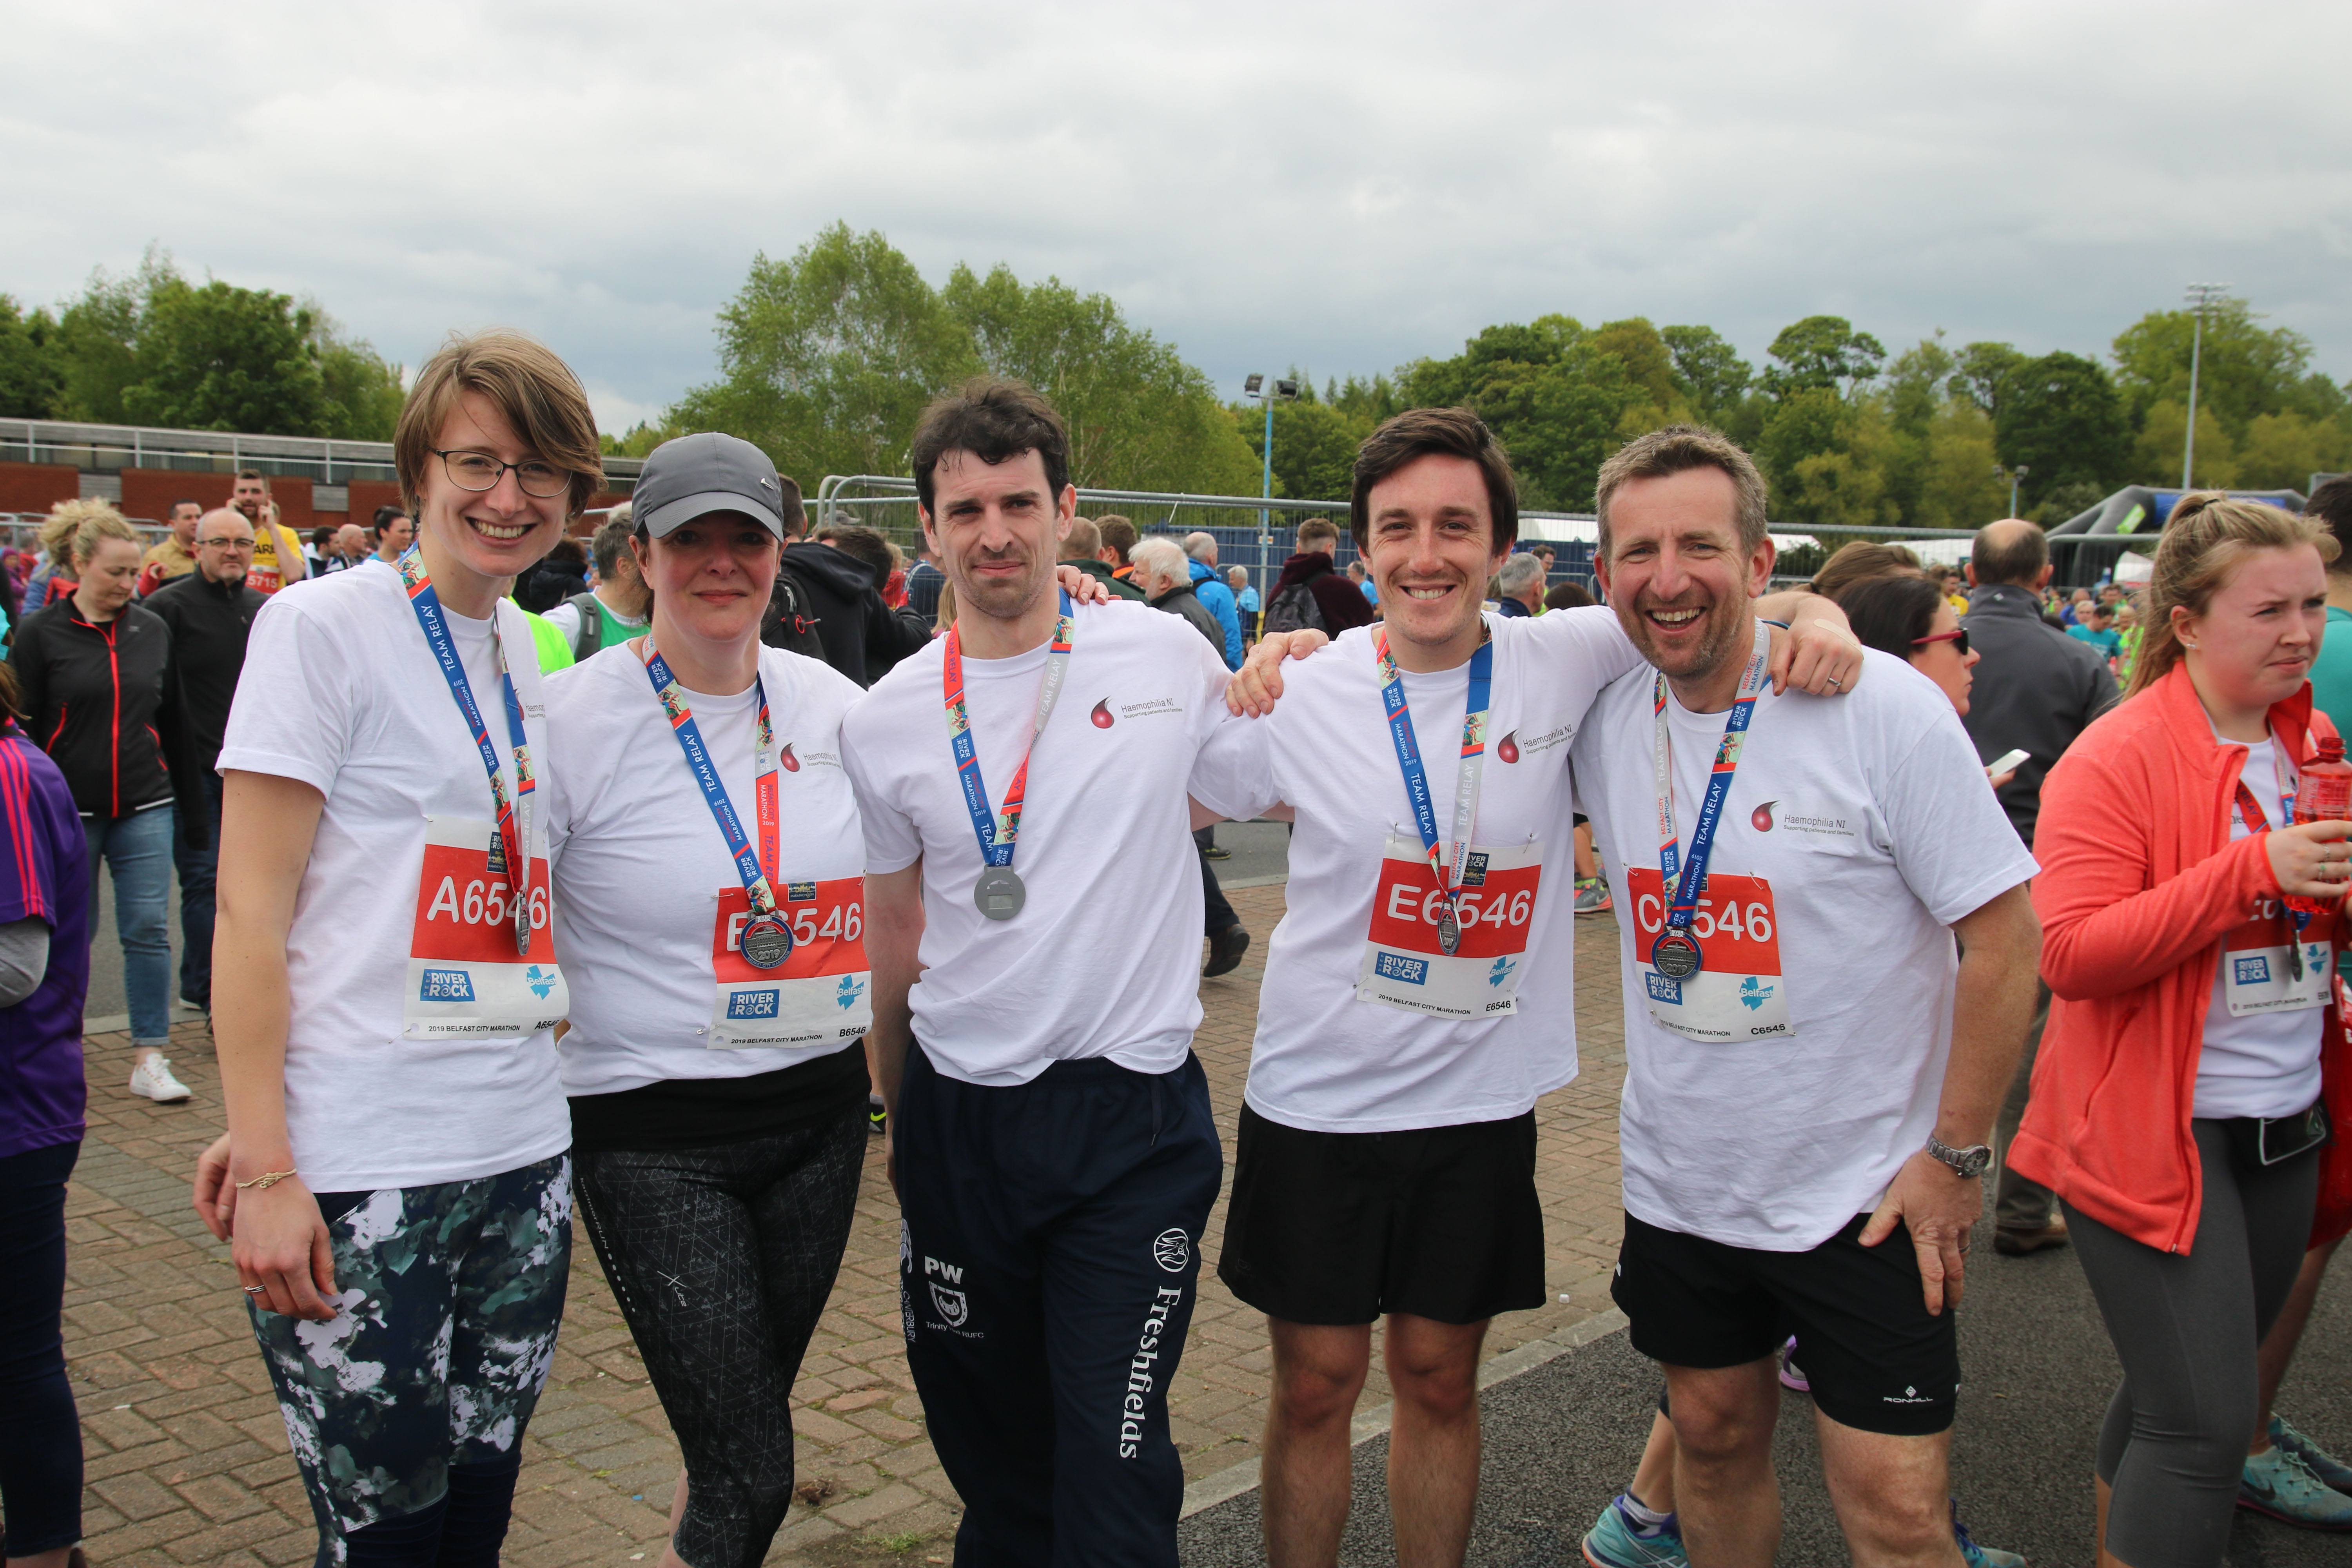 The Haemophilia NI relay team: Ruth, Brigid, Paddy, William and Declan.